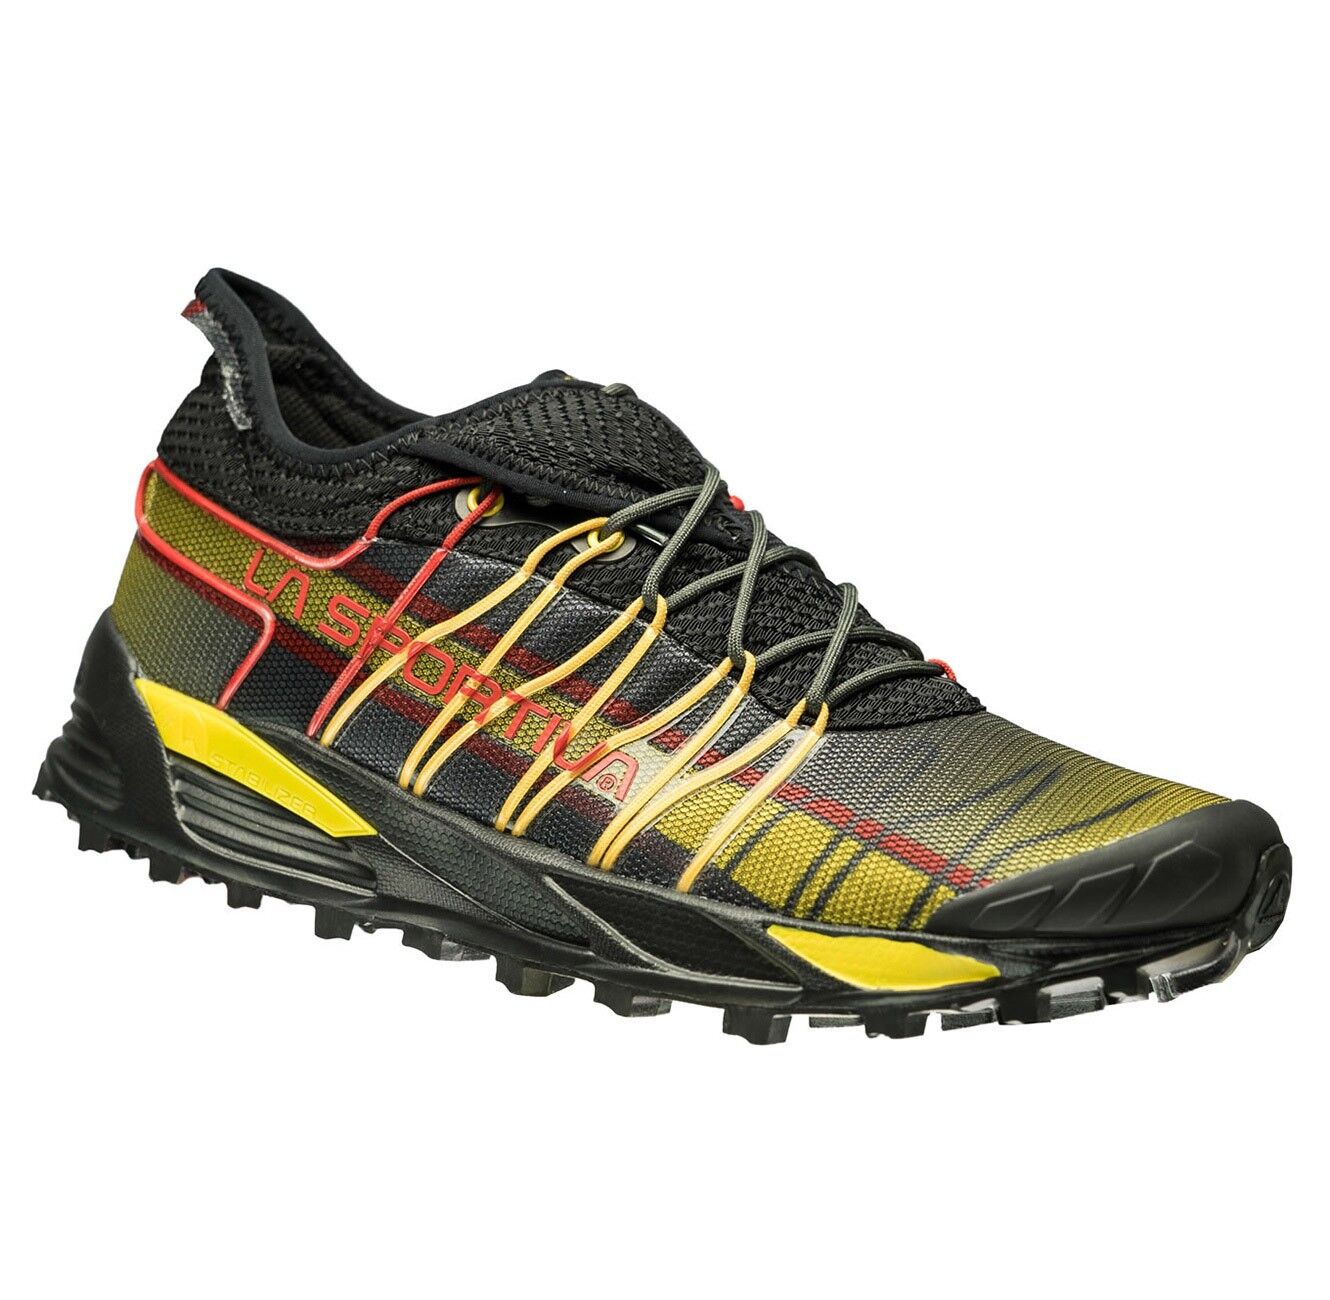 La Sportiva - Mutant - Trail running shoes - Men's